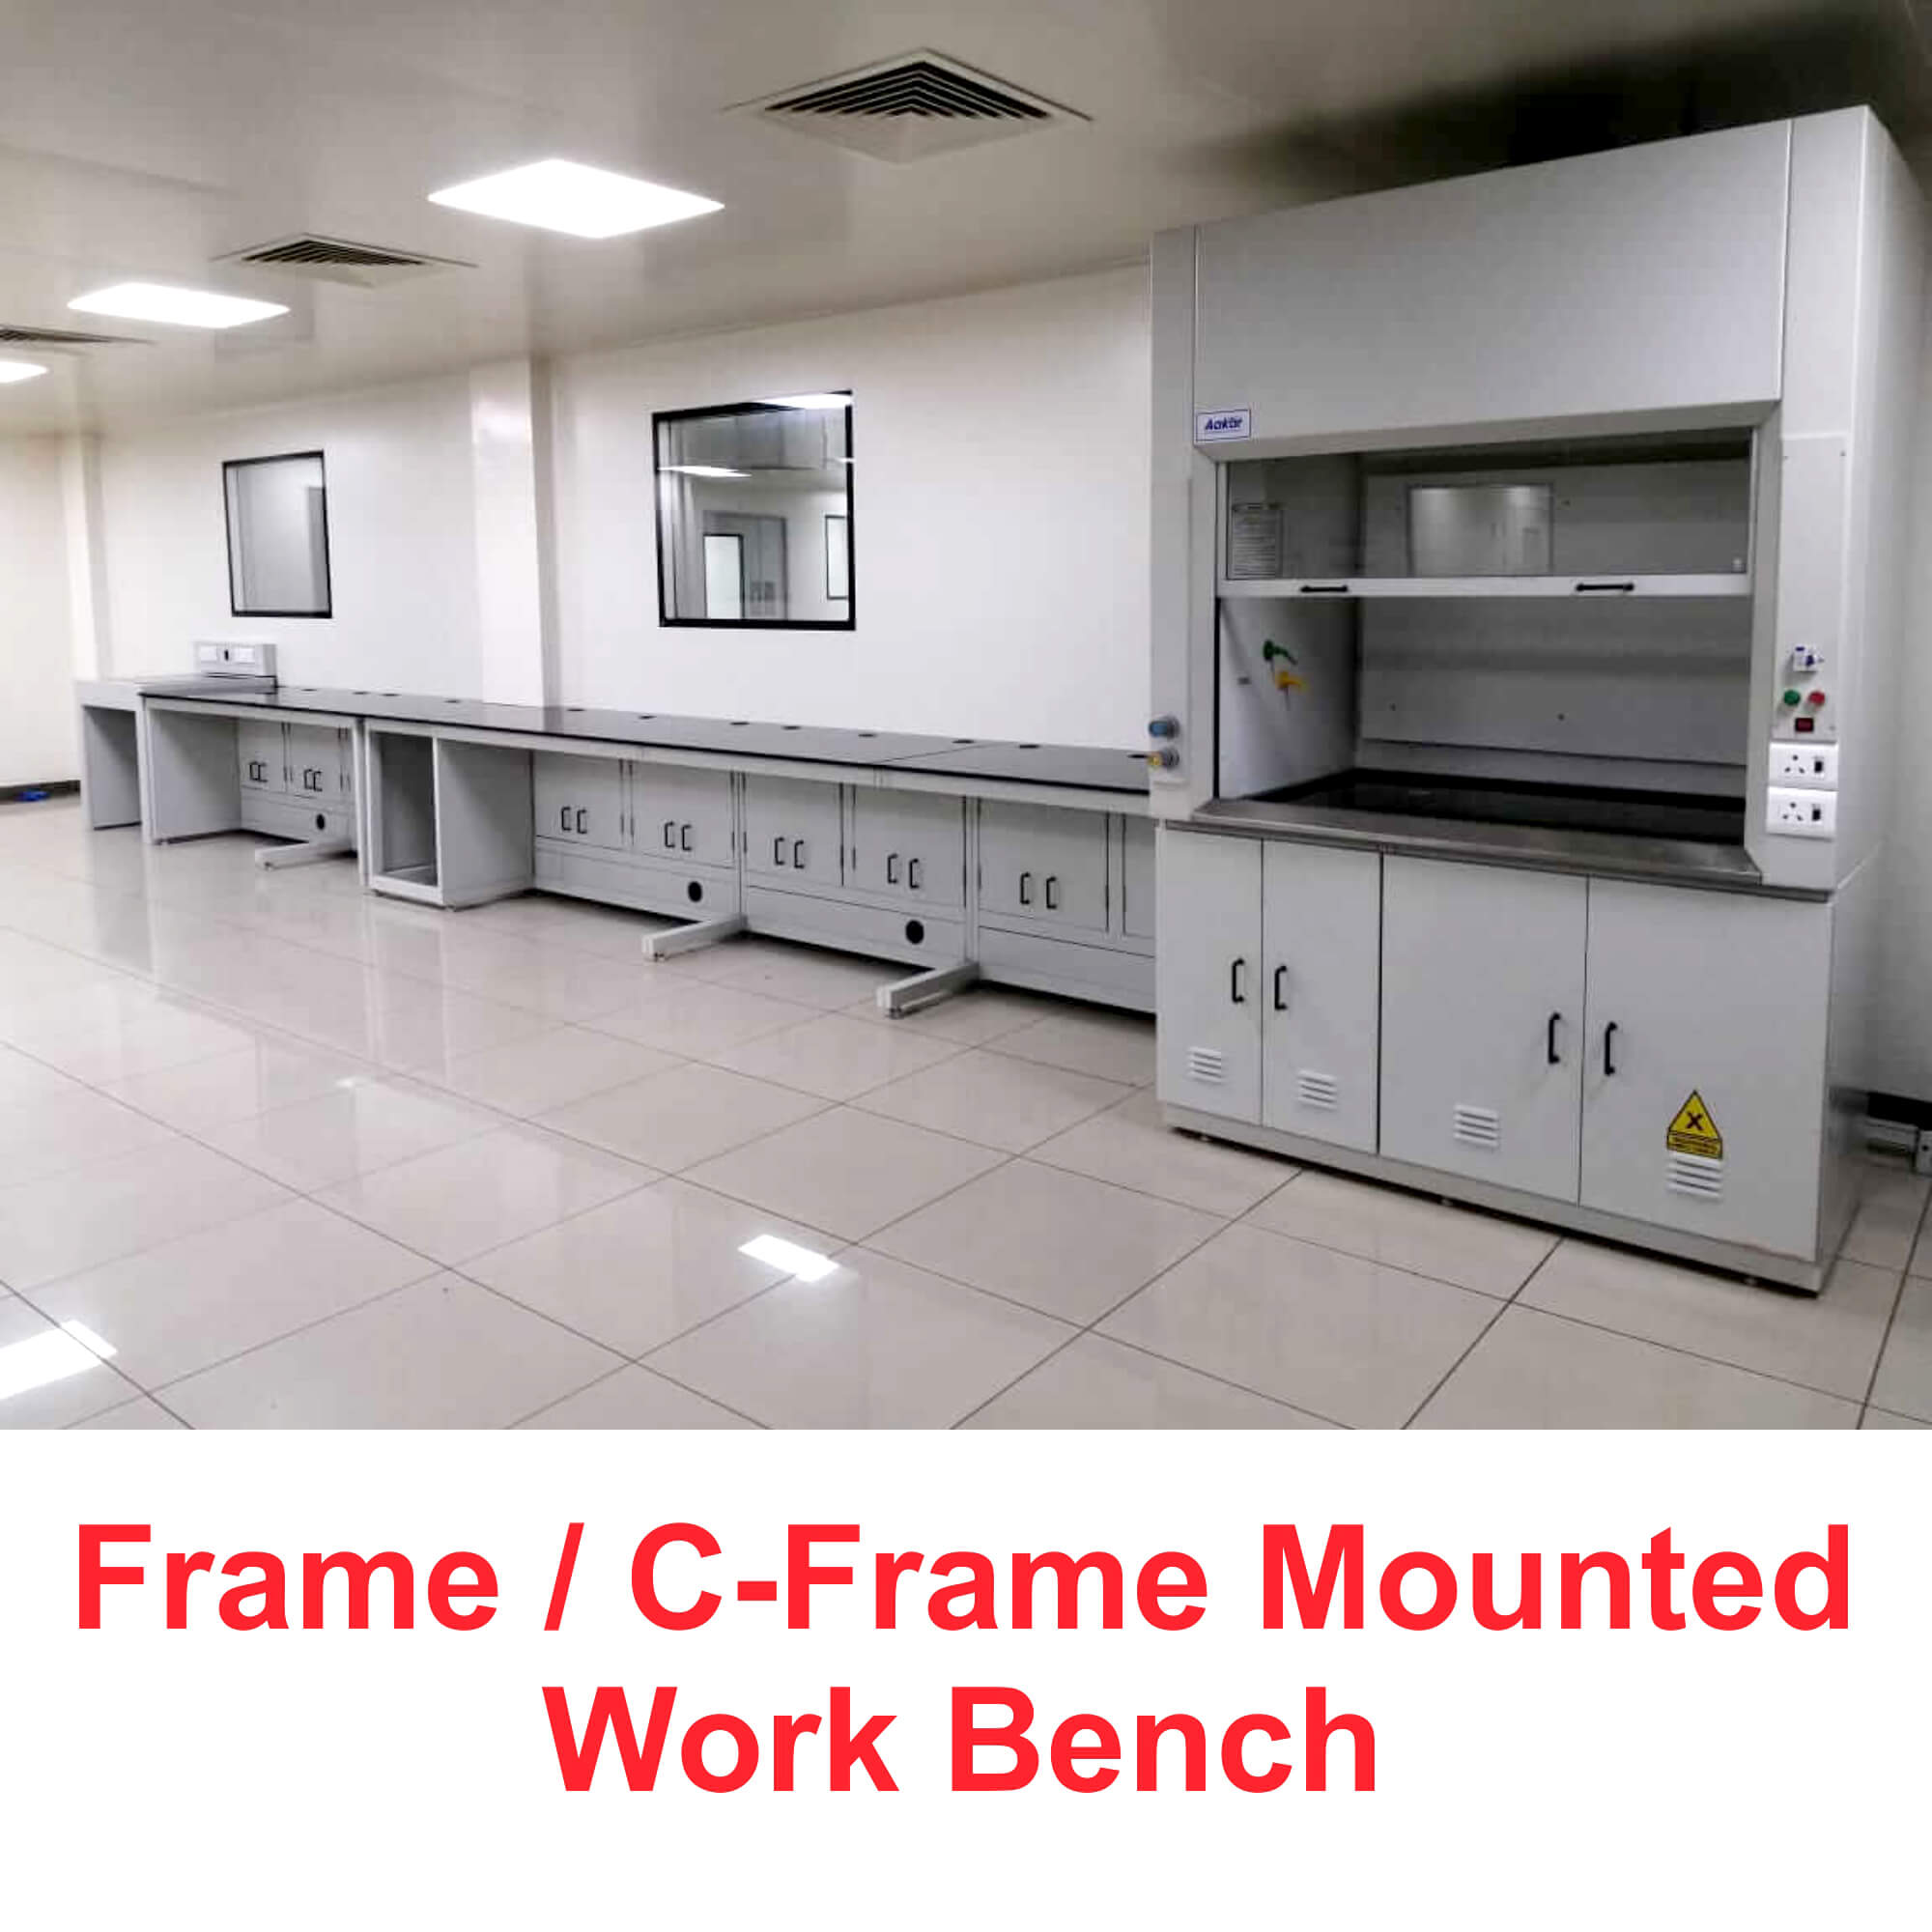 Frame / C-Frame Mounted Work Bench Manufacturer in India